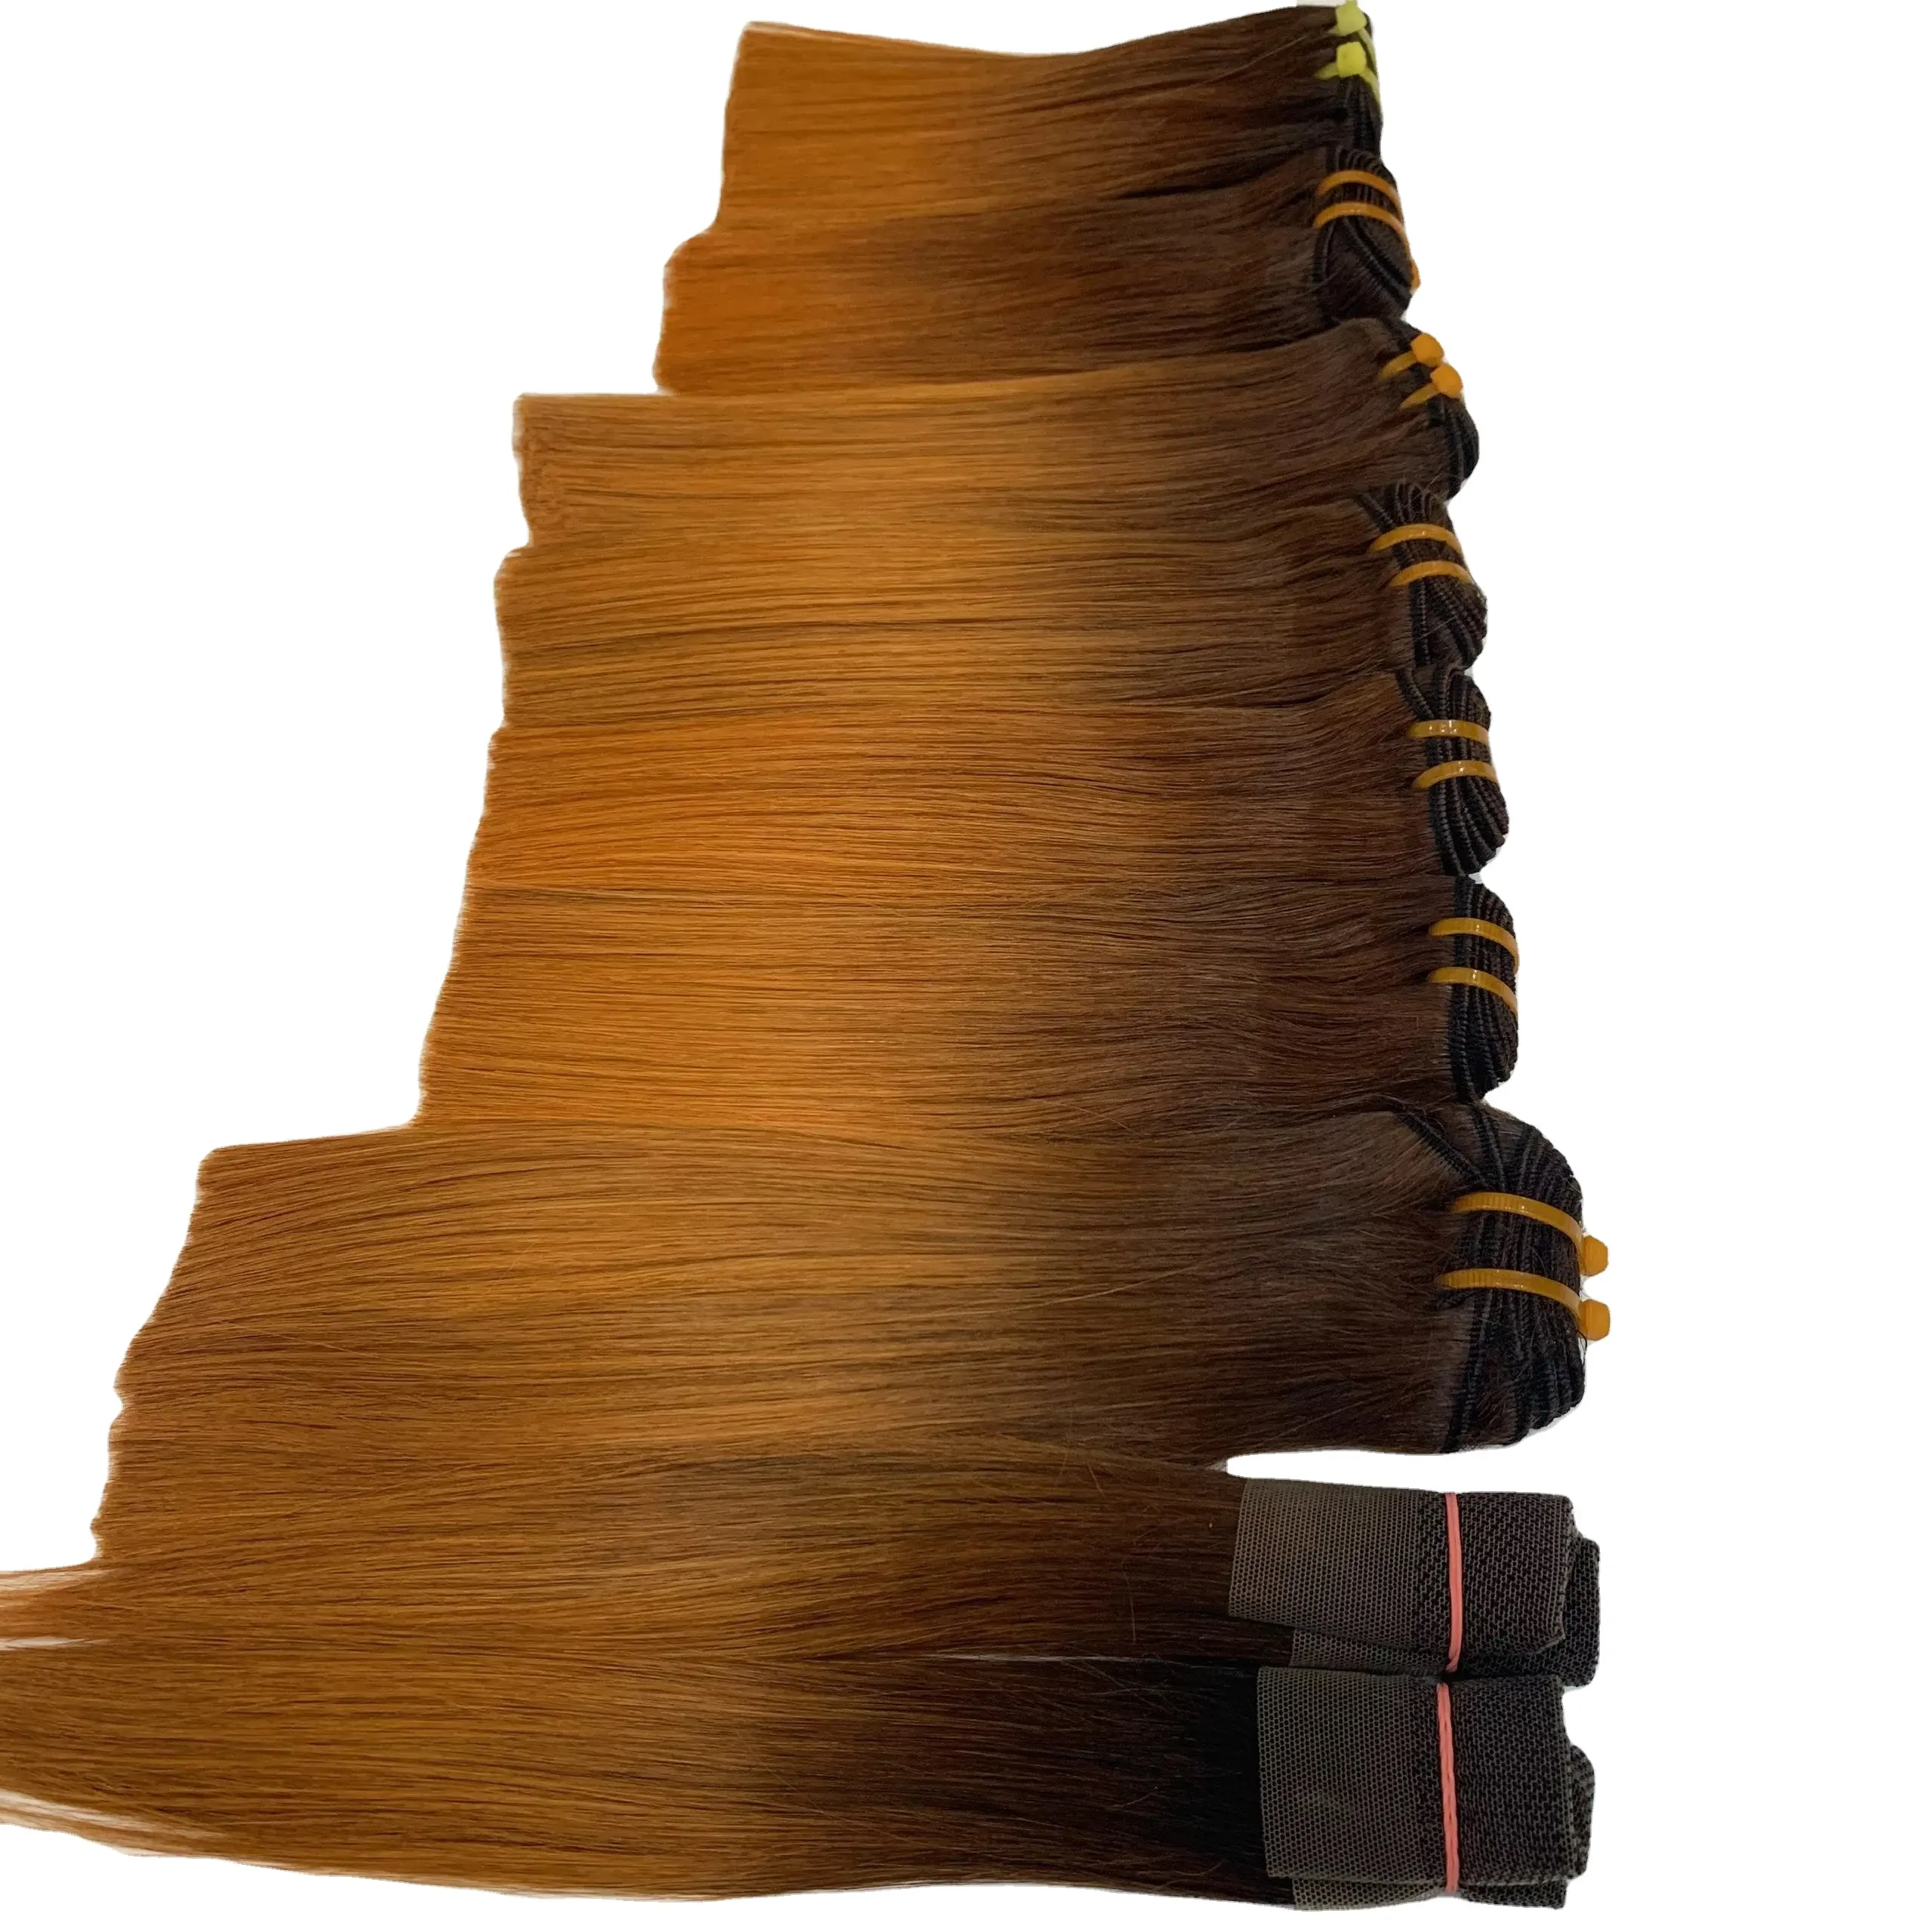 Wholesale Virgin Hair Wigs Suppliers Vietnamese Color Wigs Pure Wigs Promotion Raw Materials Vietnam